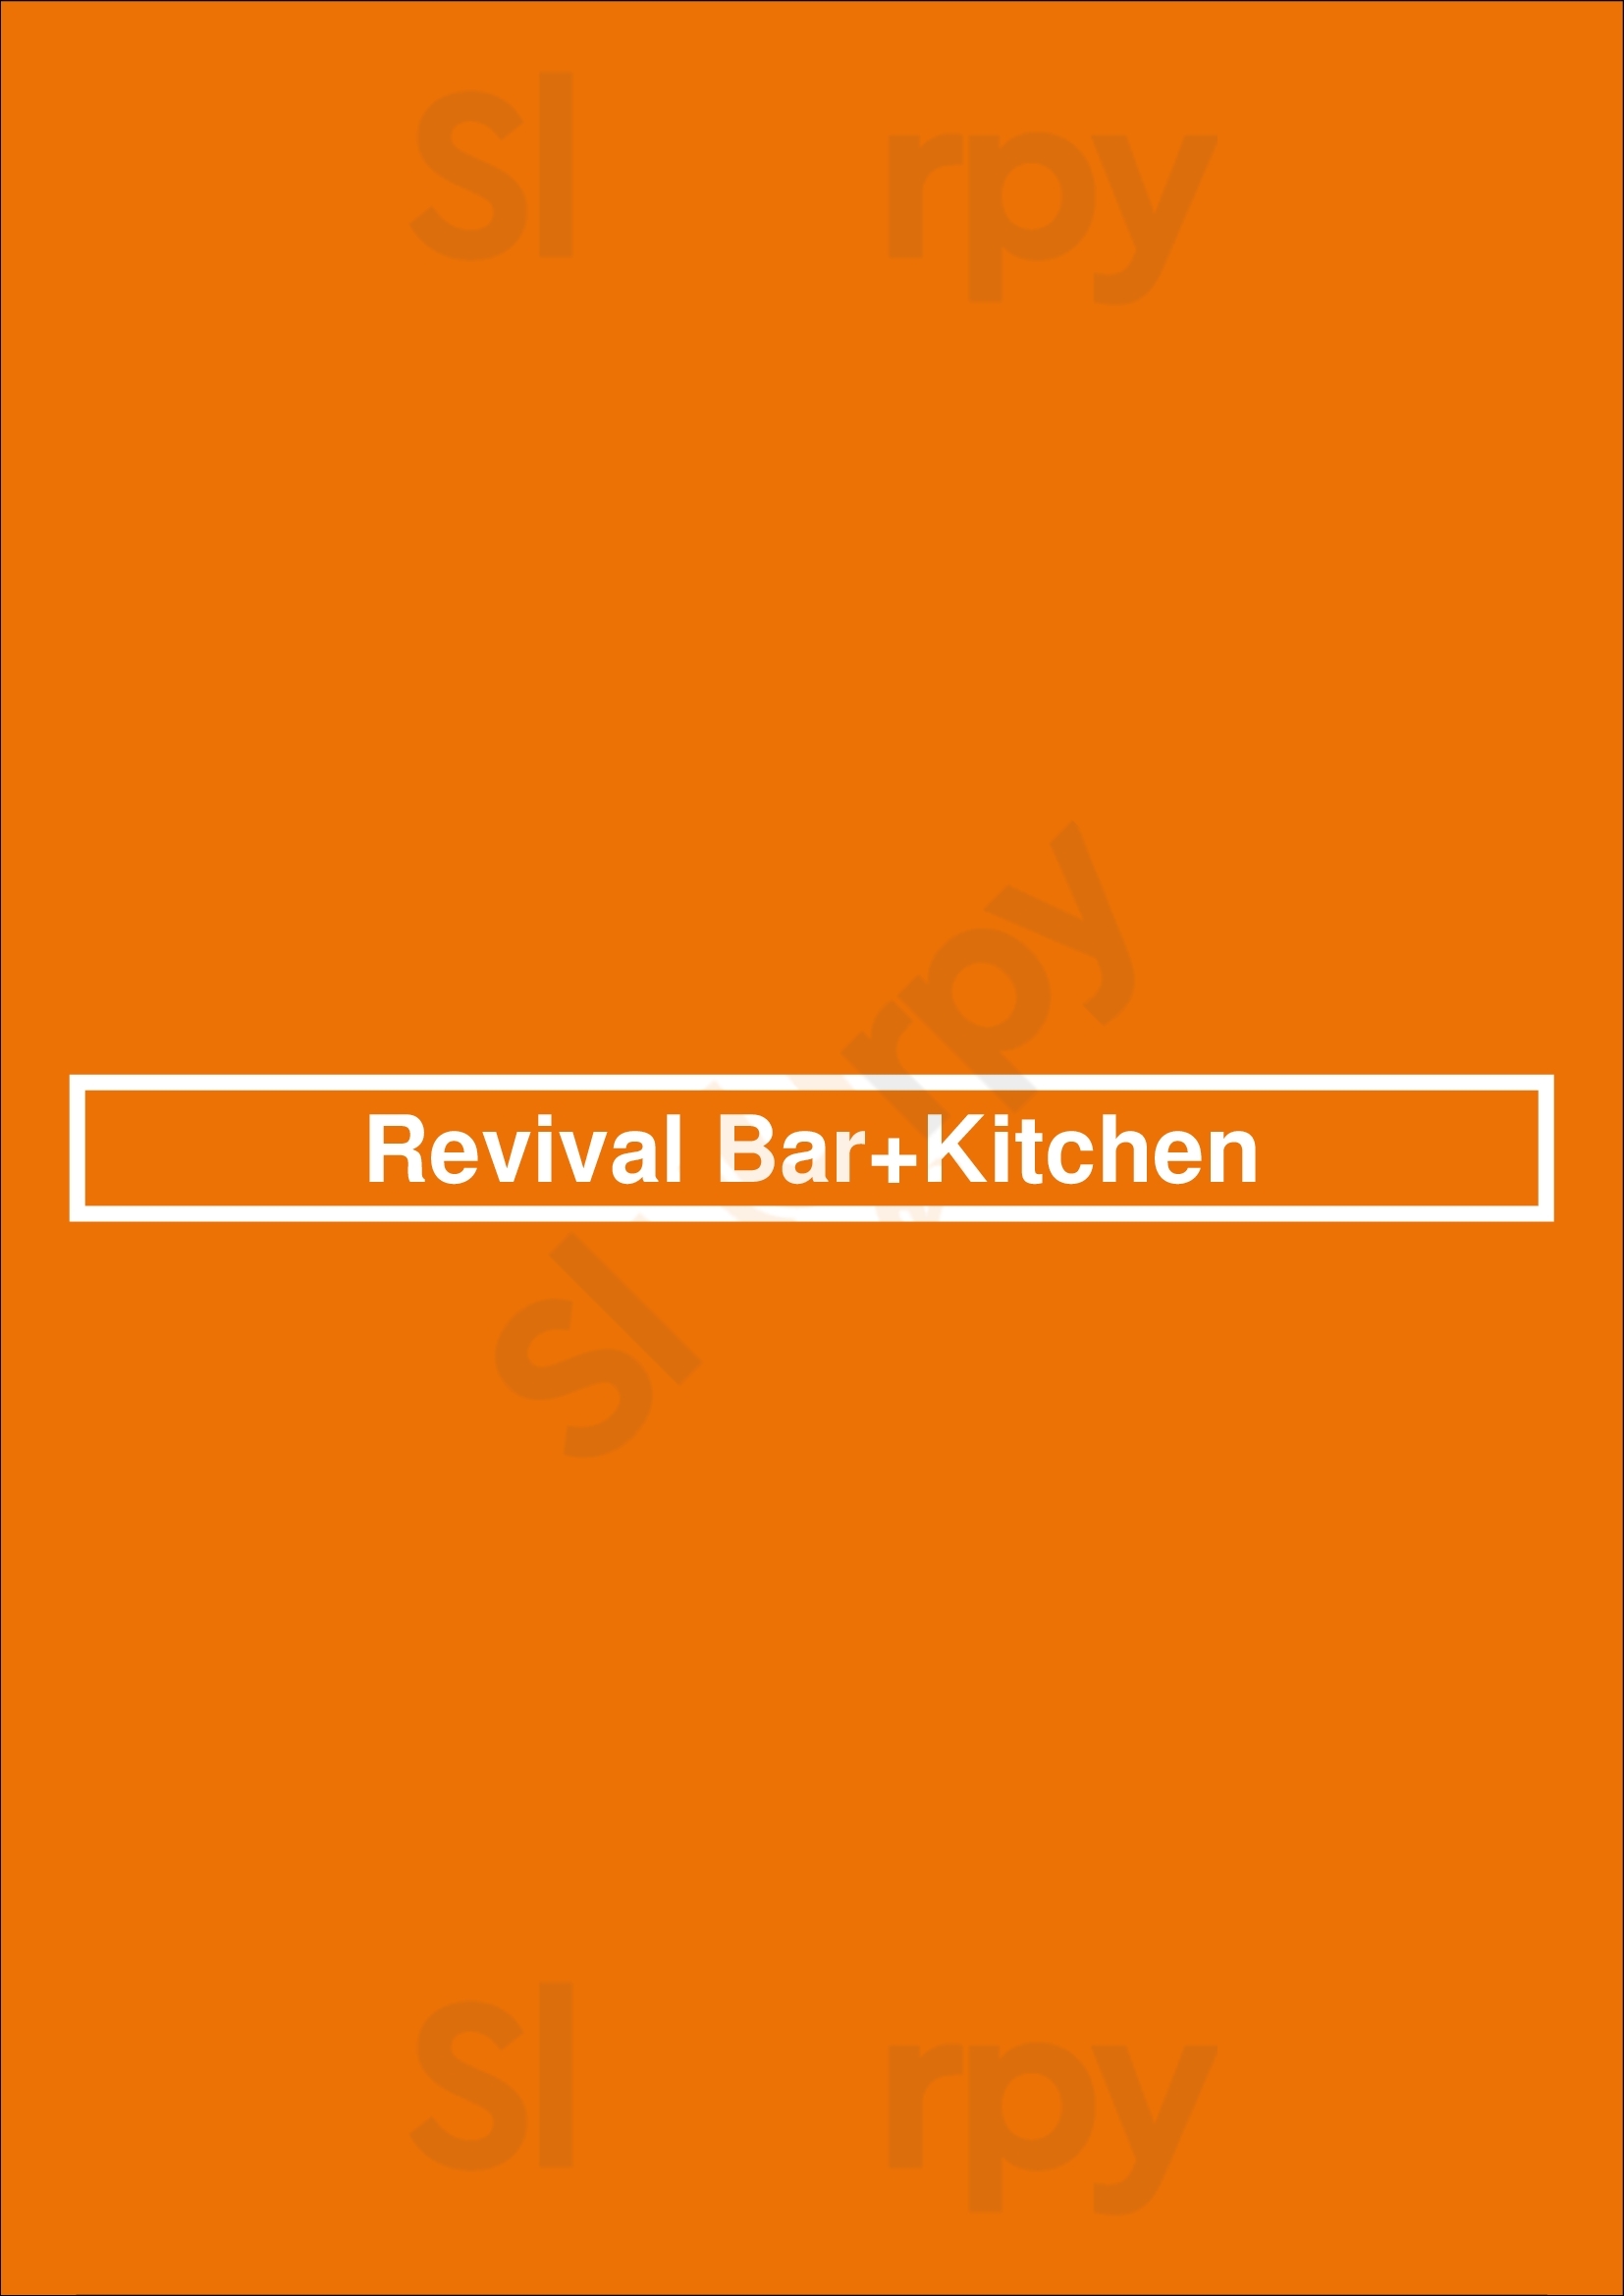 Revival Bar+kitchen Berkeley Menu - 1